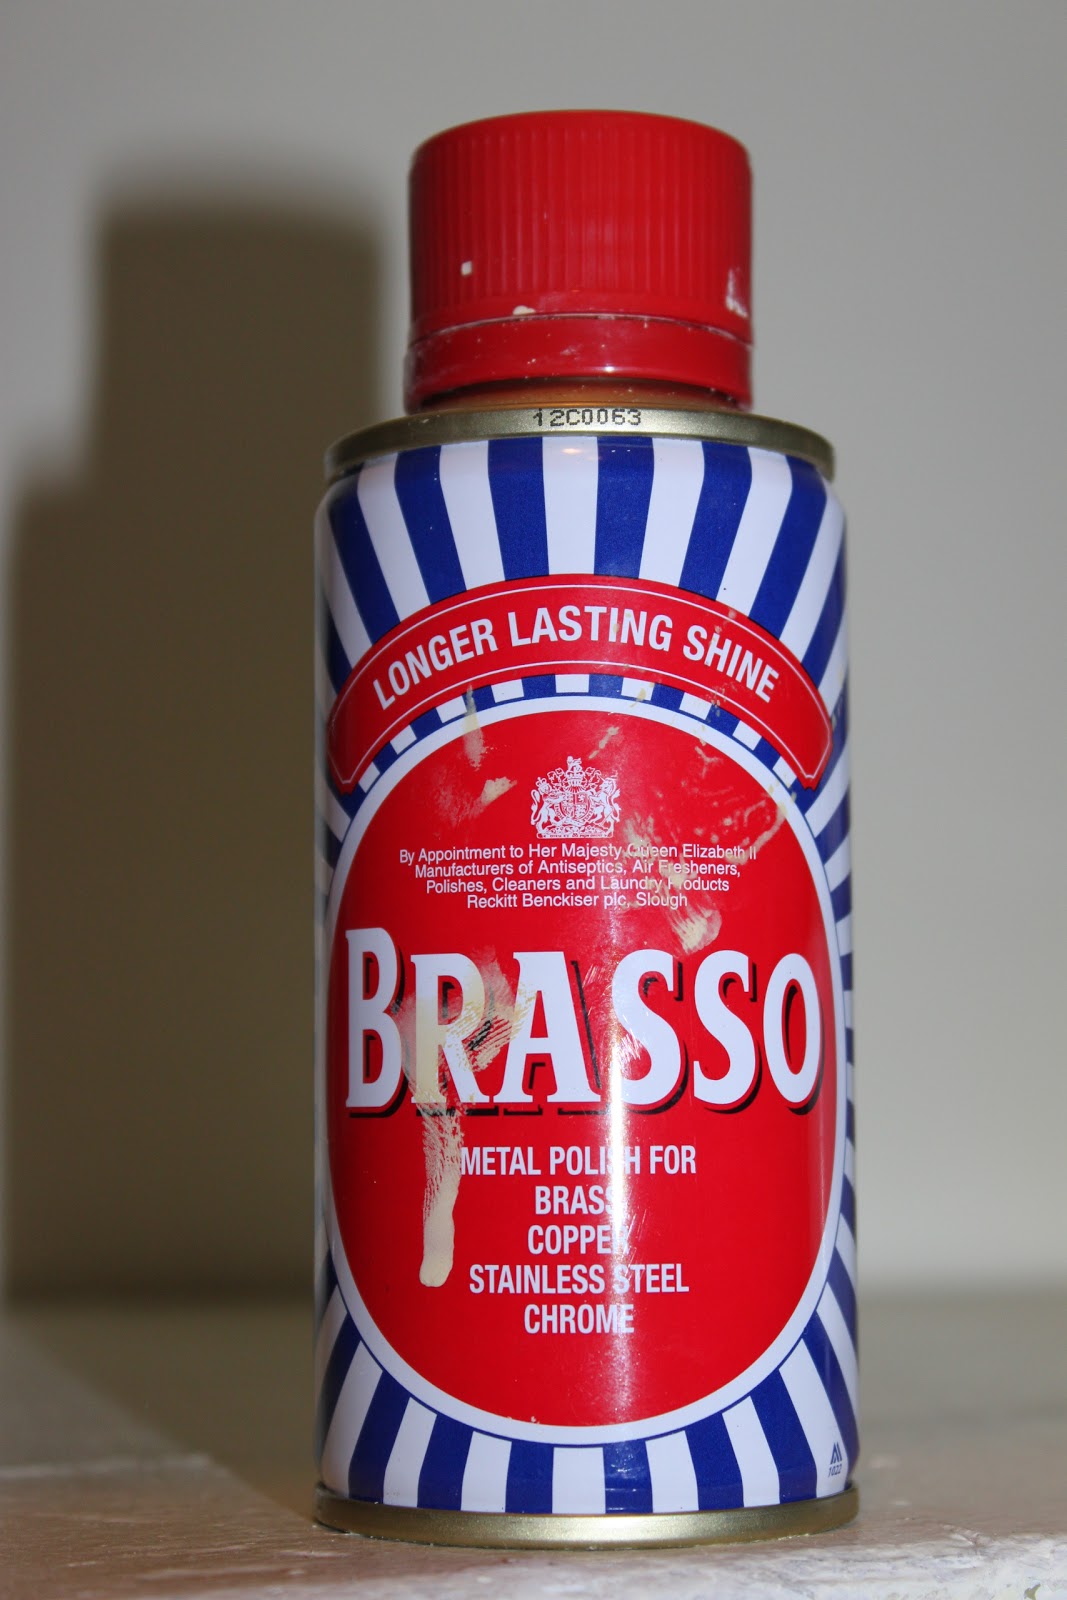 Brasso - Wikipedia